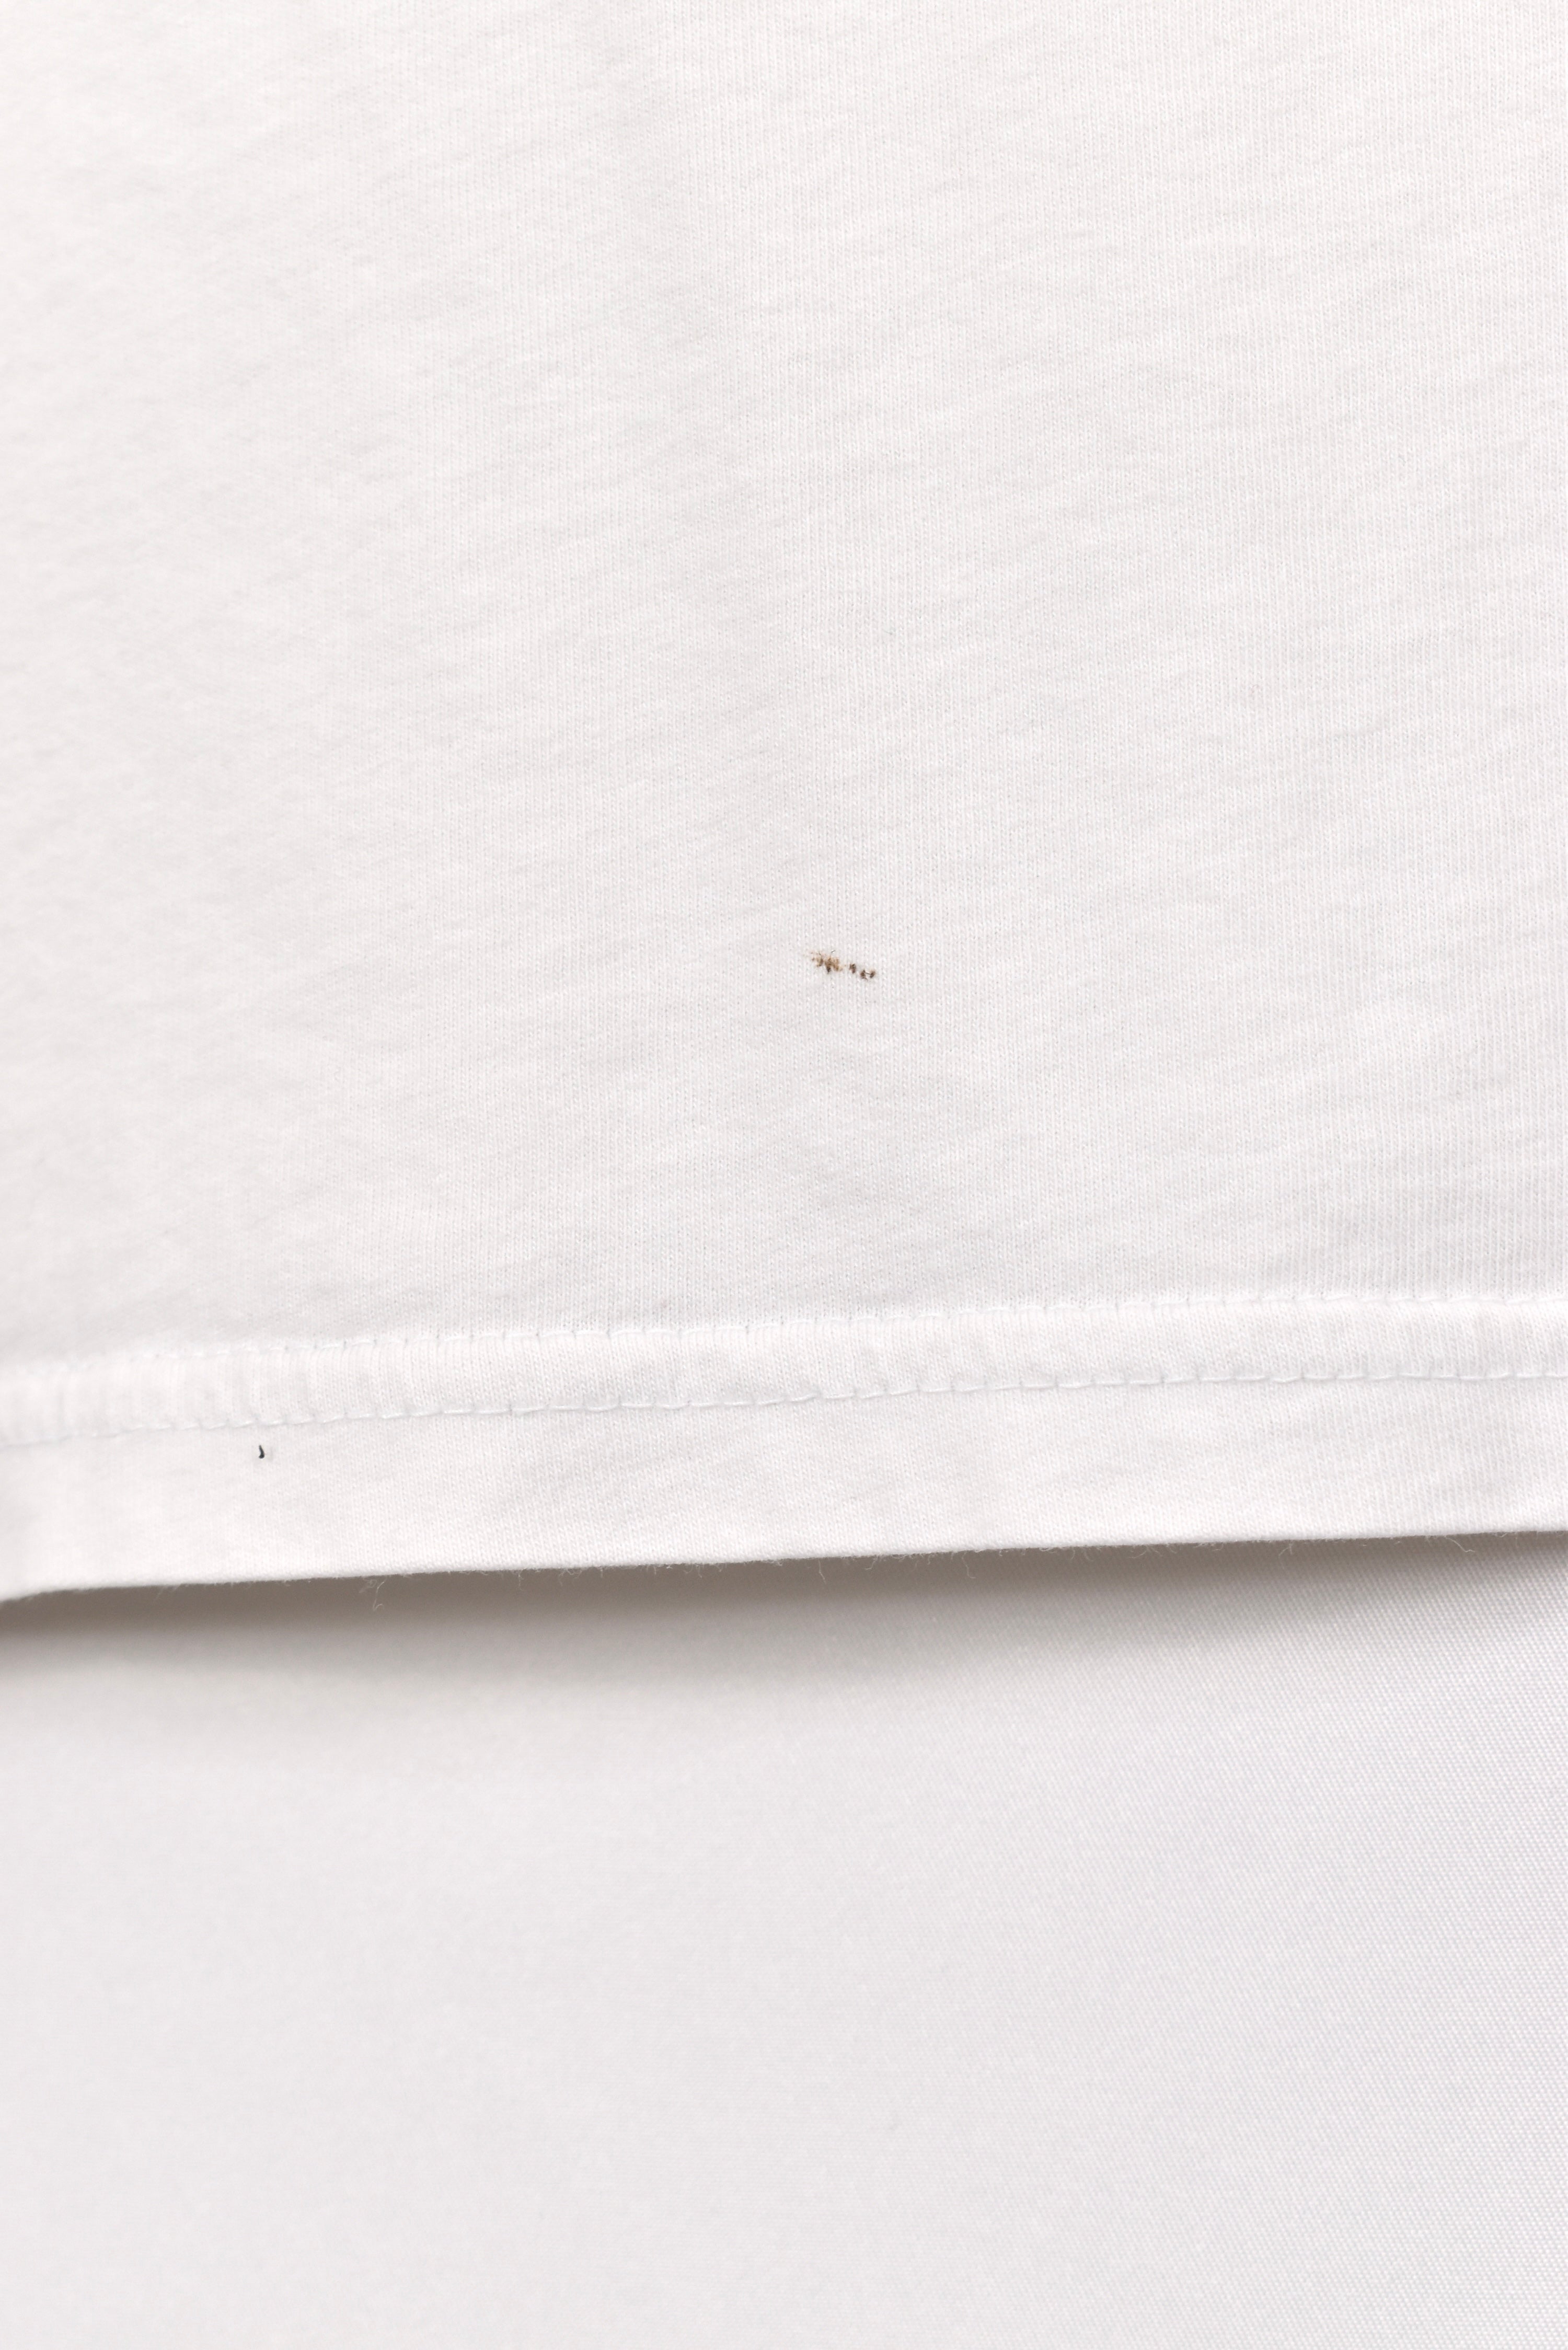 Women's modern Adidas shirt, white graphic tee - AU M ADIDAS